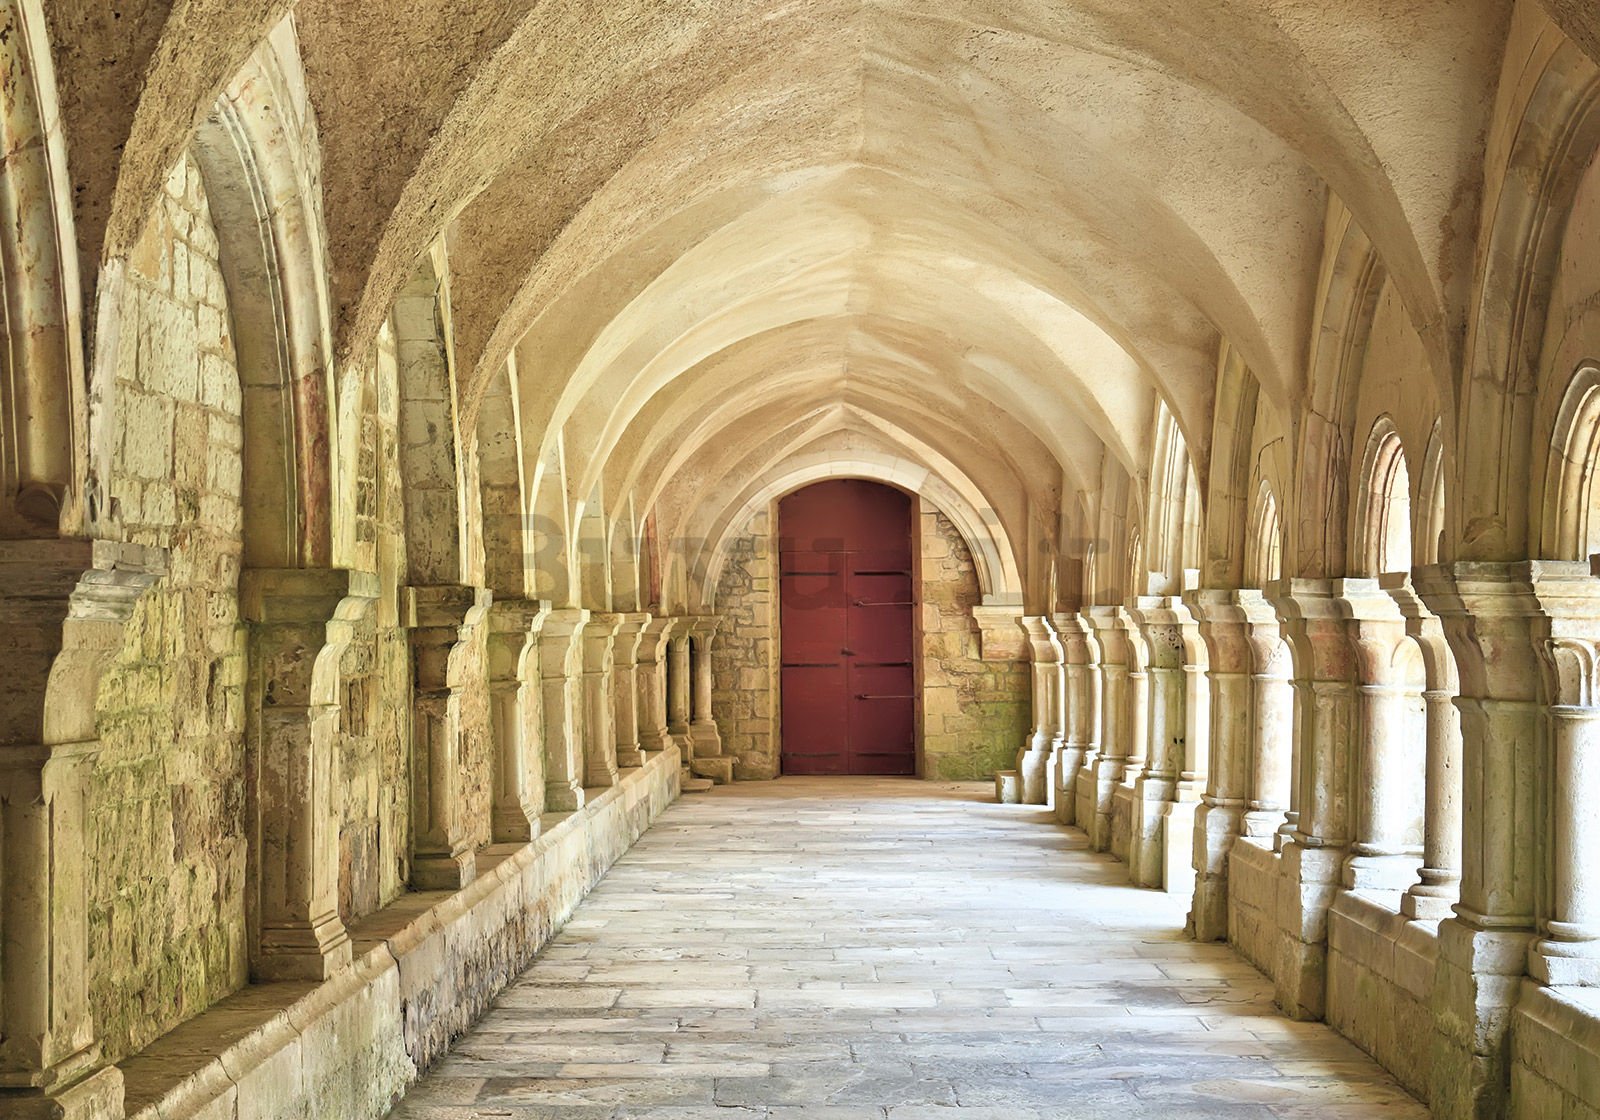 Fotomurale in TNT: Monastero di Fontenay - 350x245 cm